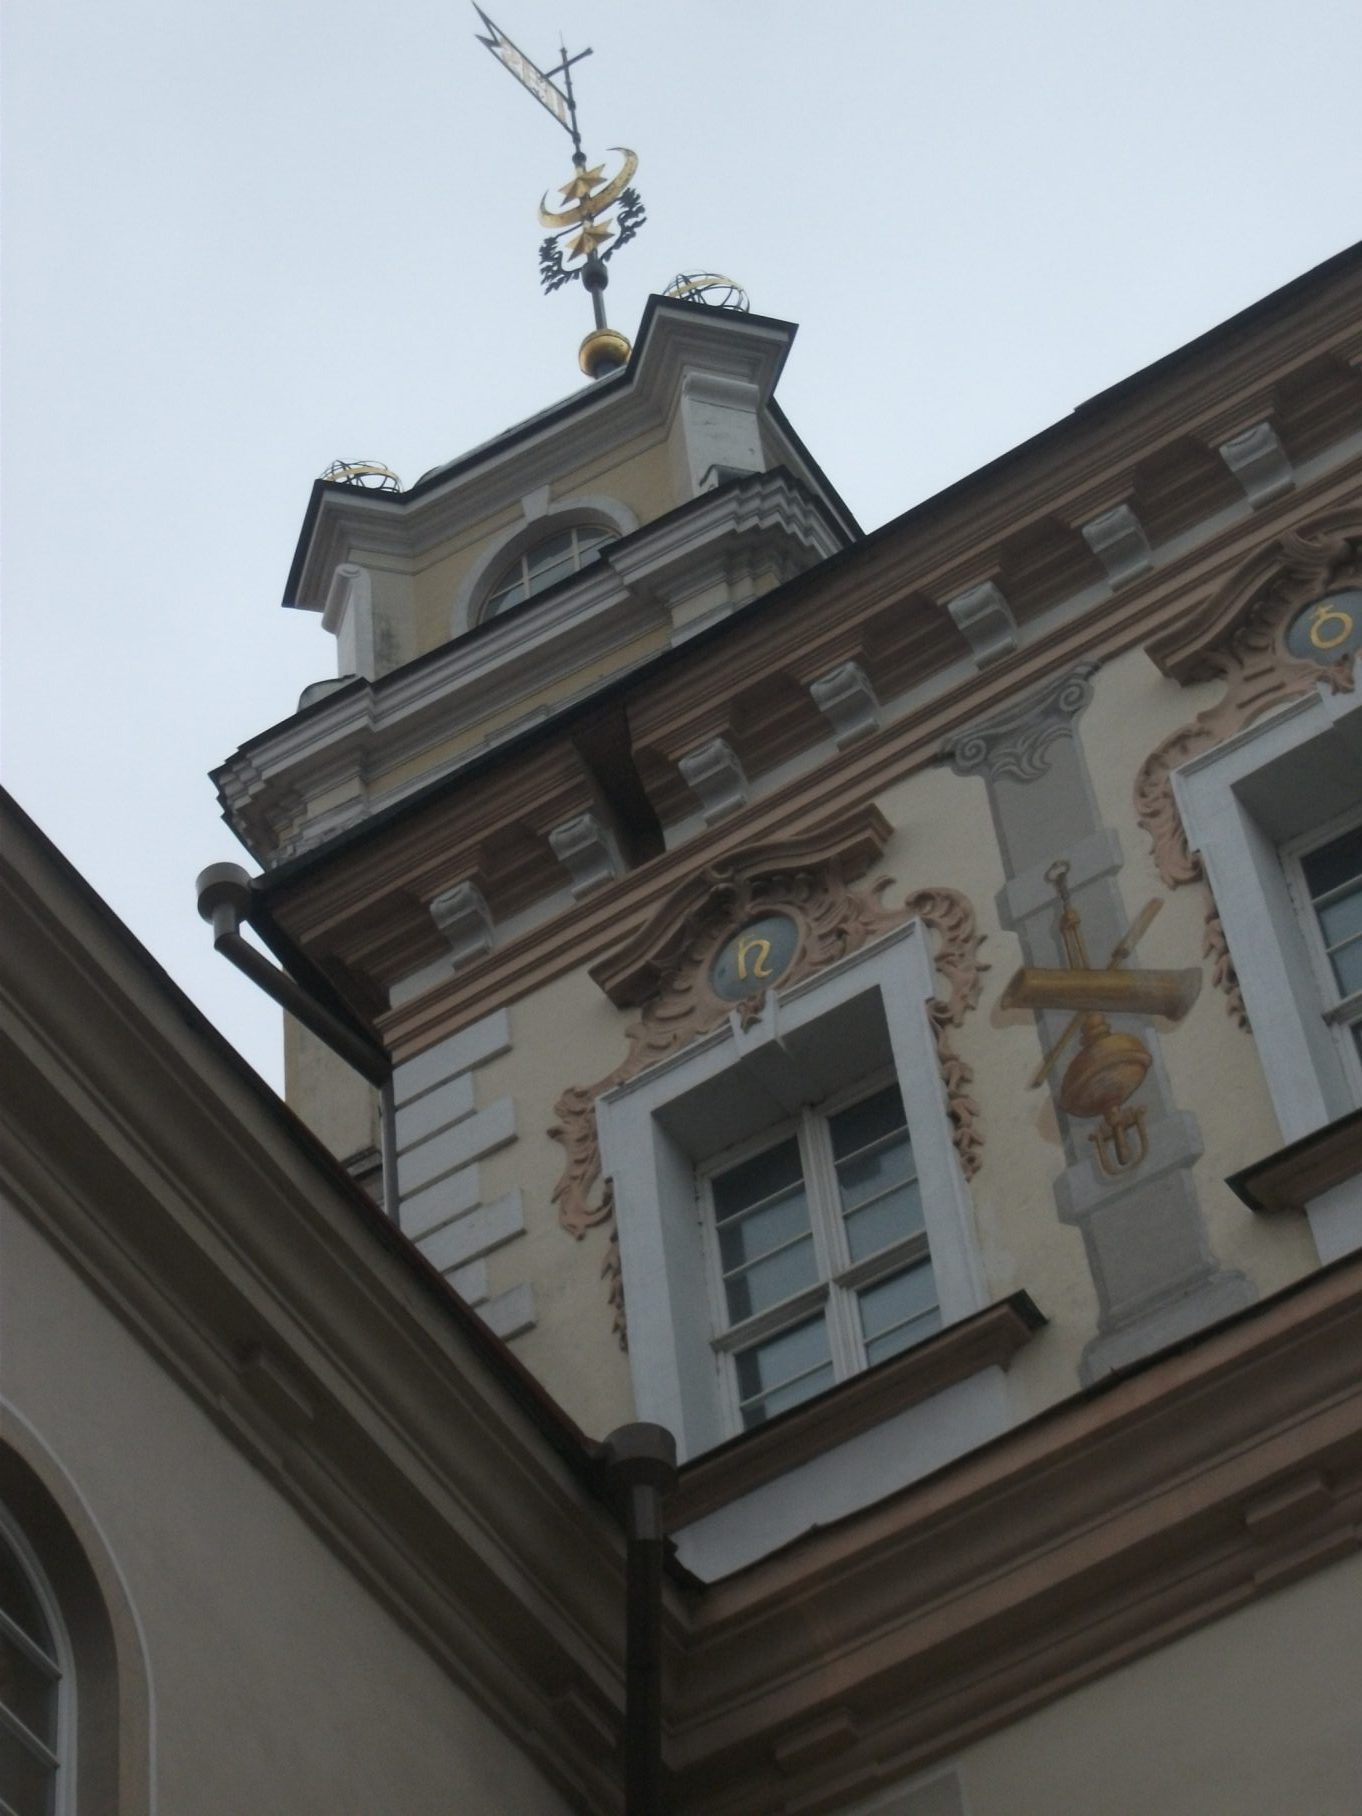 Vilnius University: The Observatory Tower